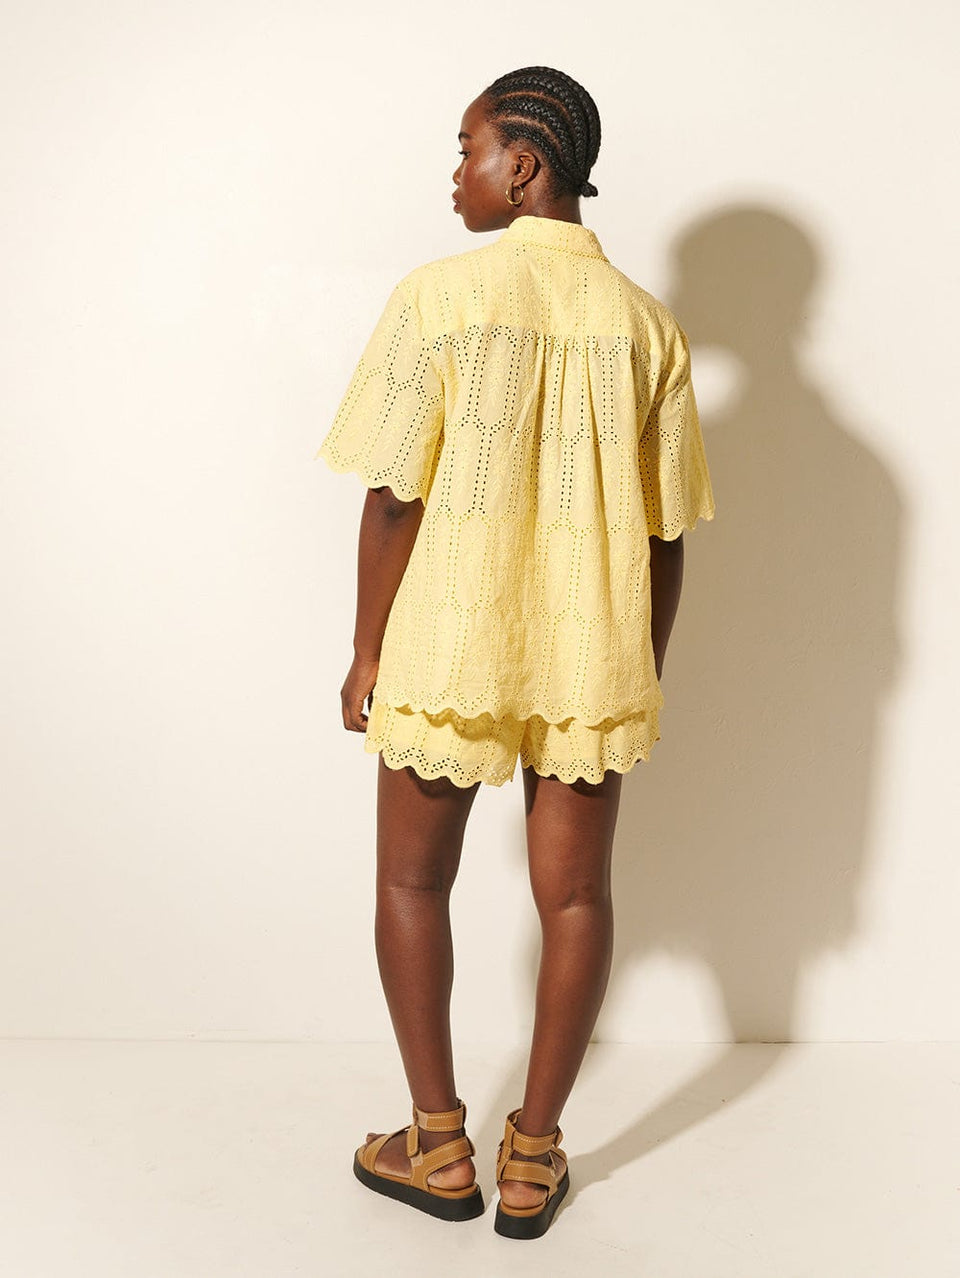 Estelle Short KIVARI | Model wears yellow shorts back view